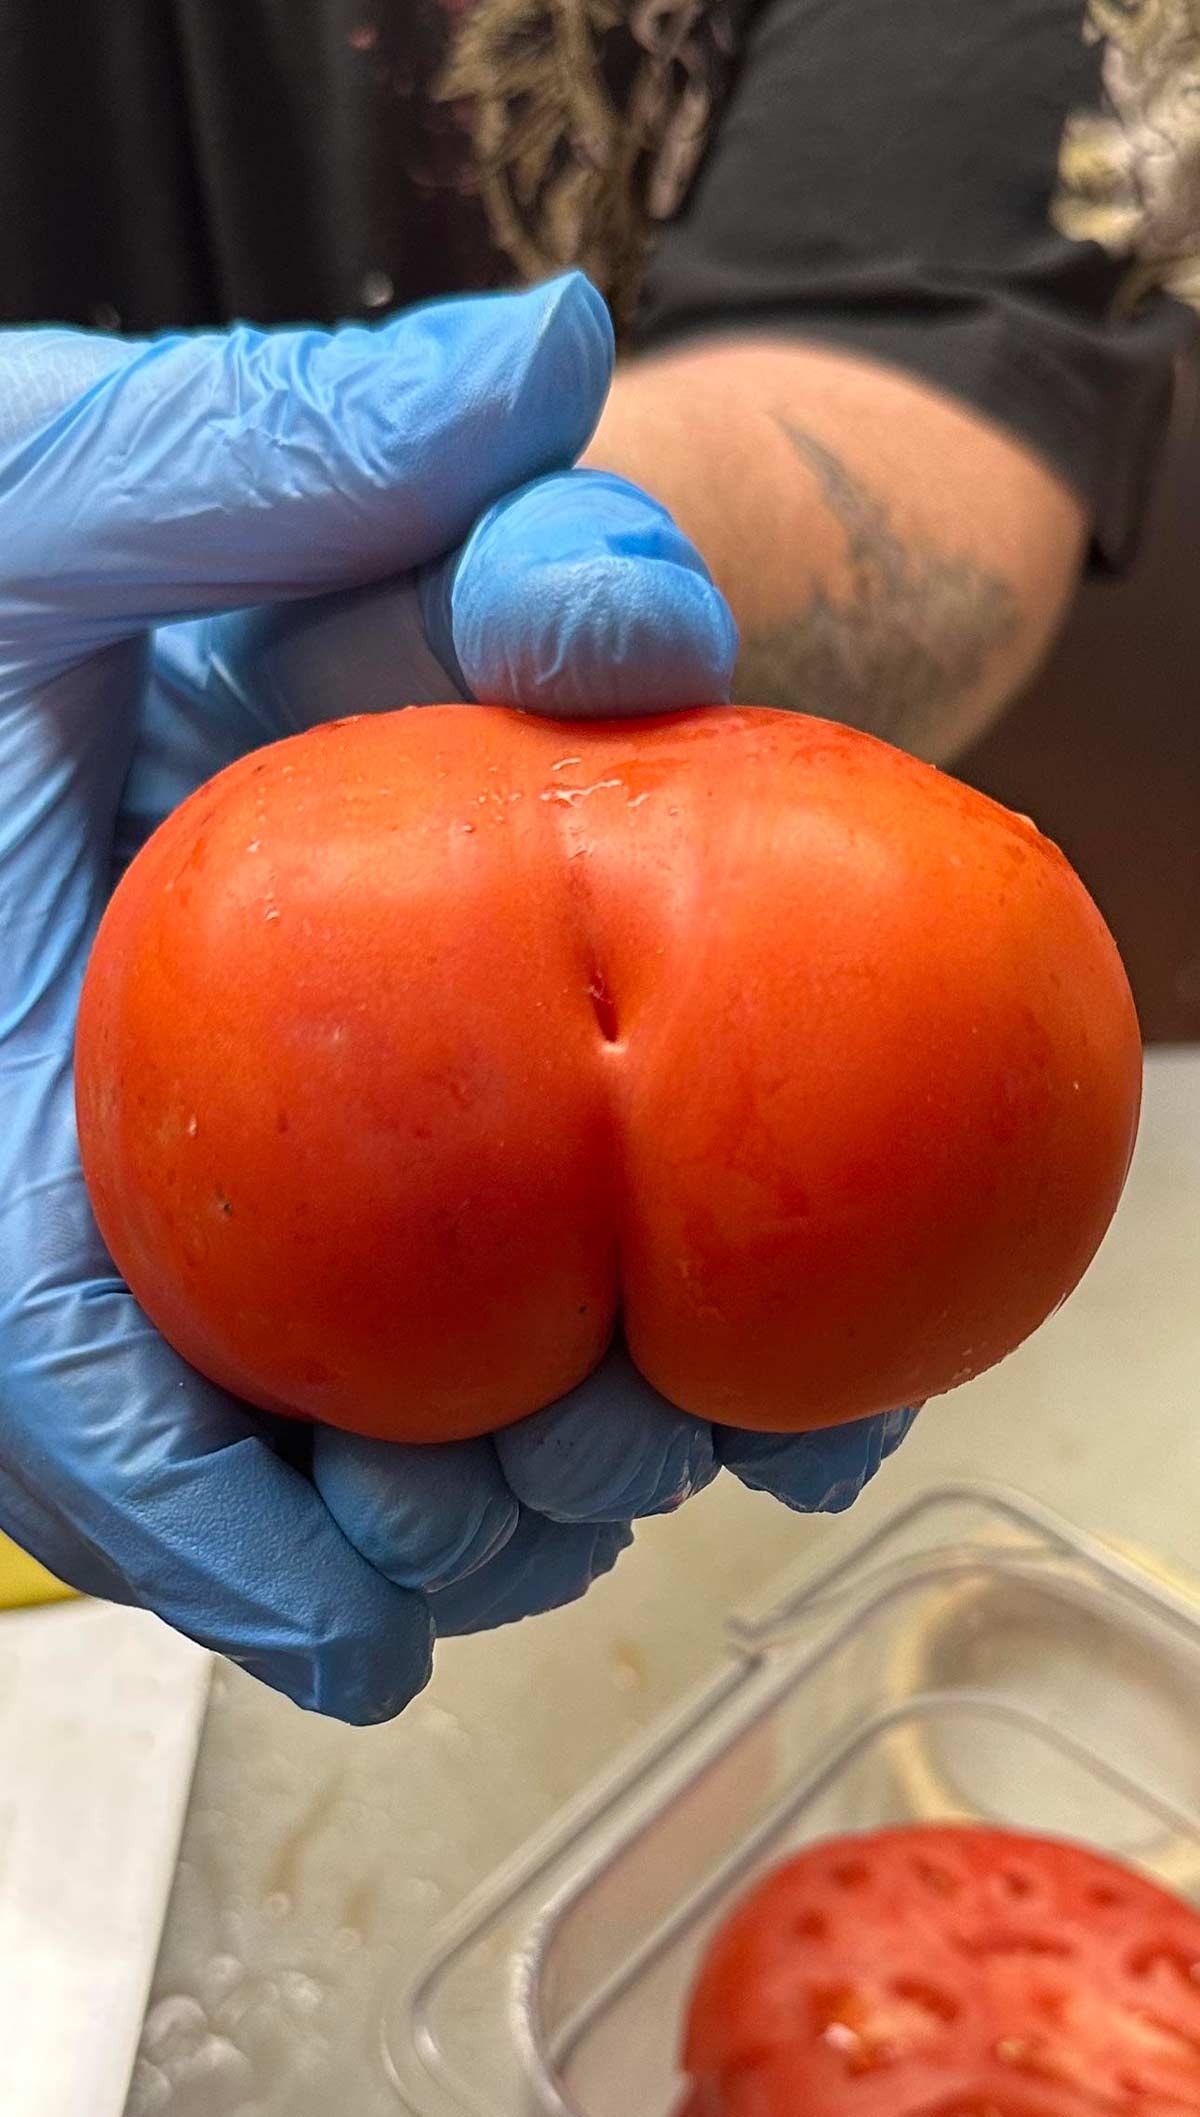 Tomato found at work today